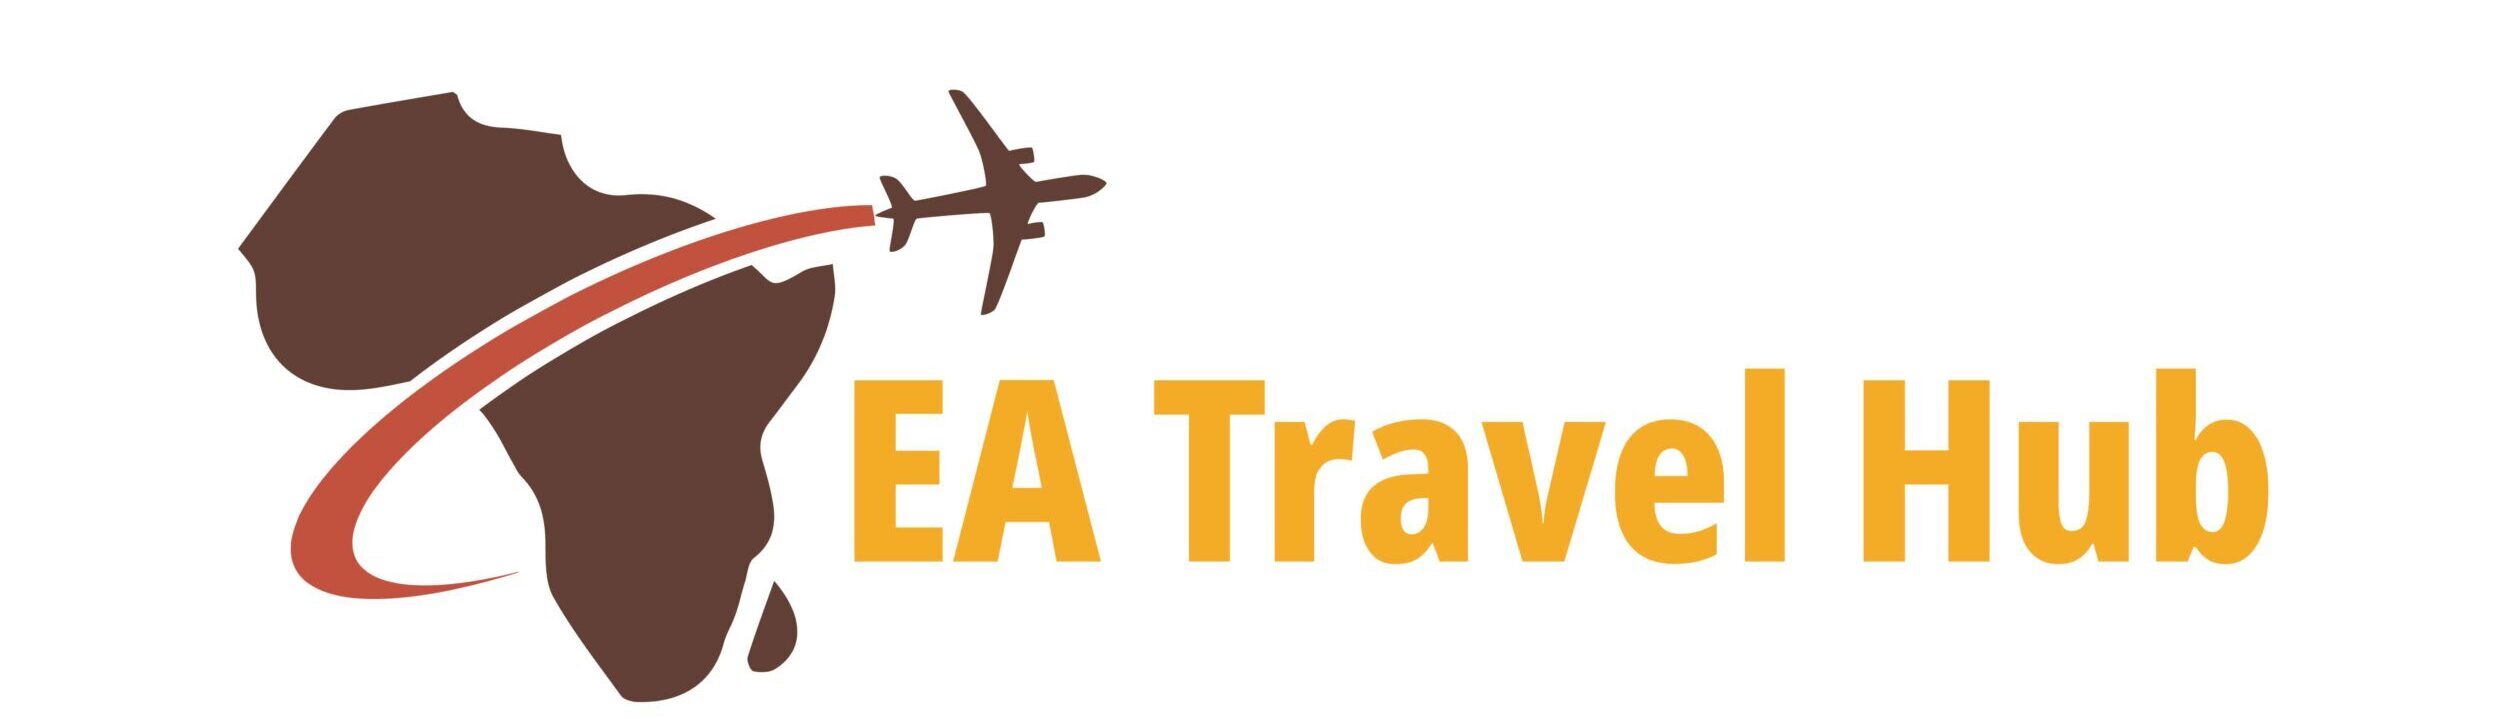 EA Travel Hub